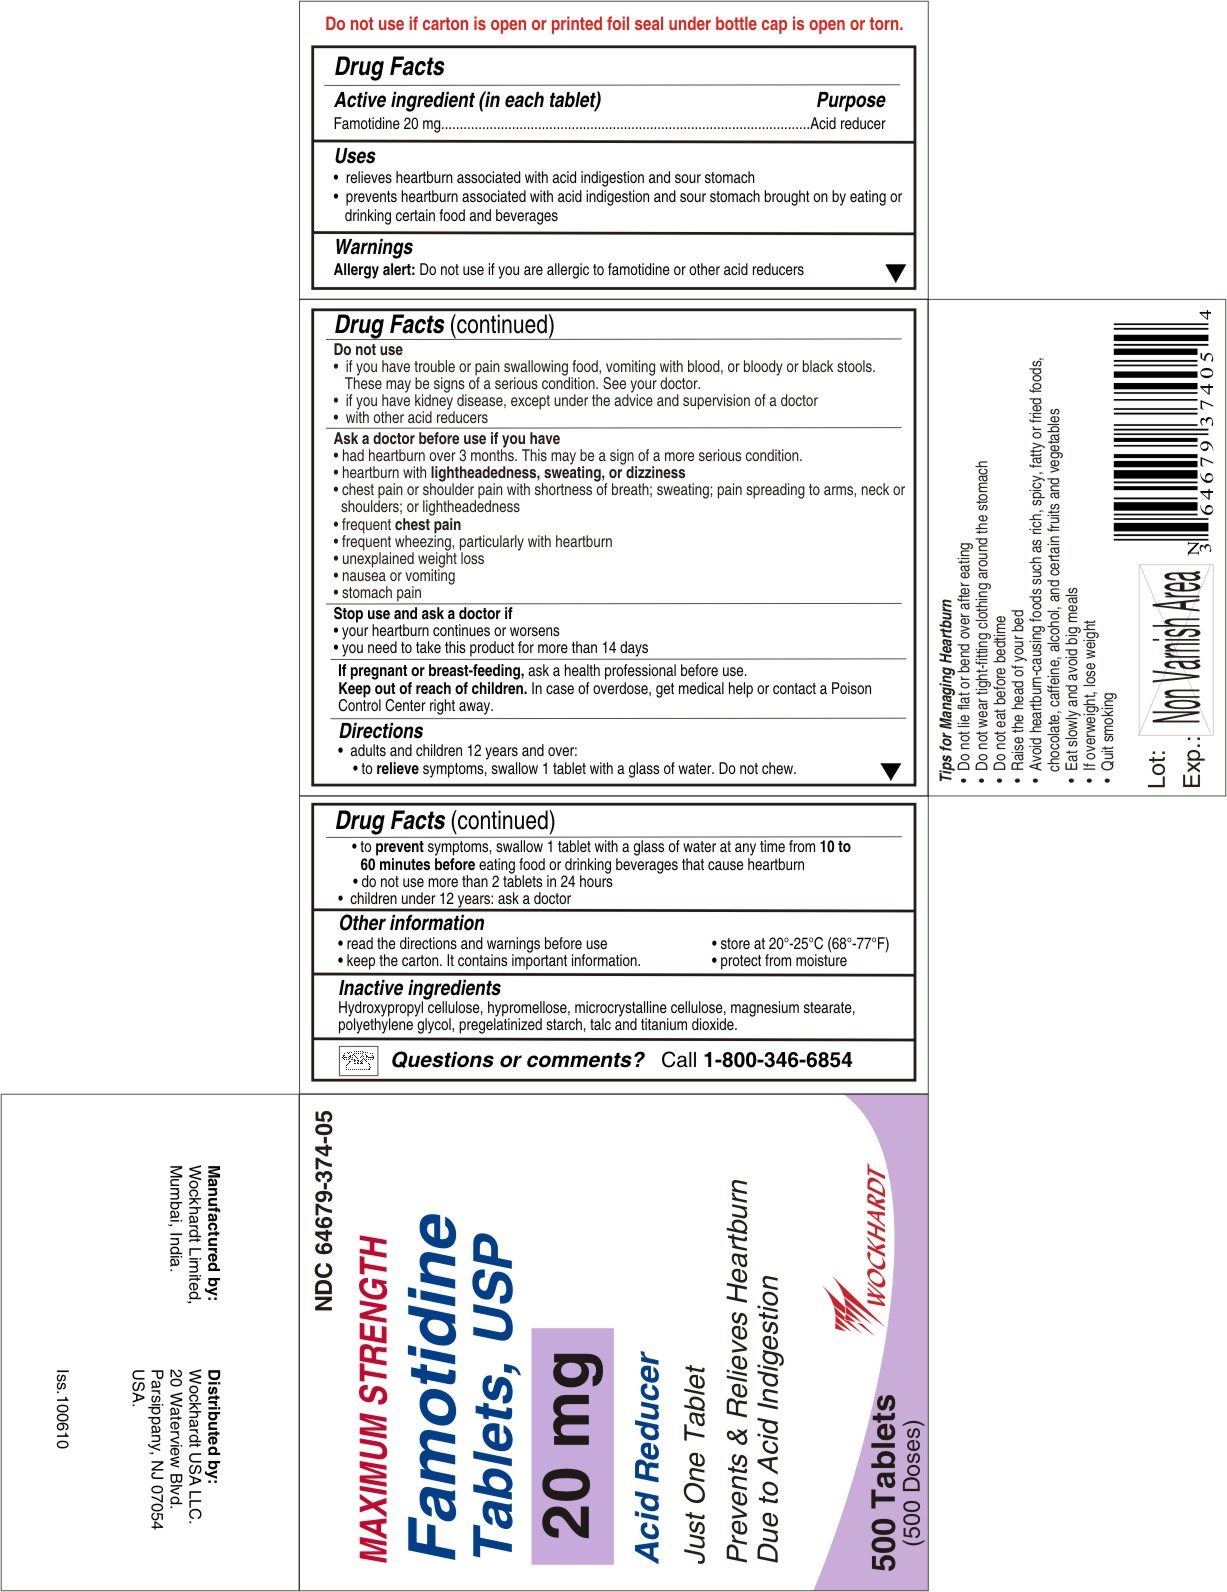 Famotidine 20 mg_OTC_500's Bottle Carton